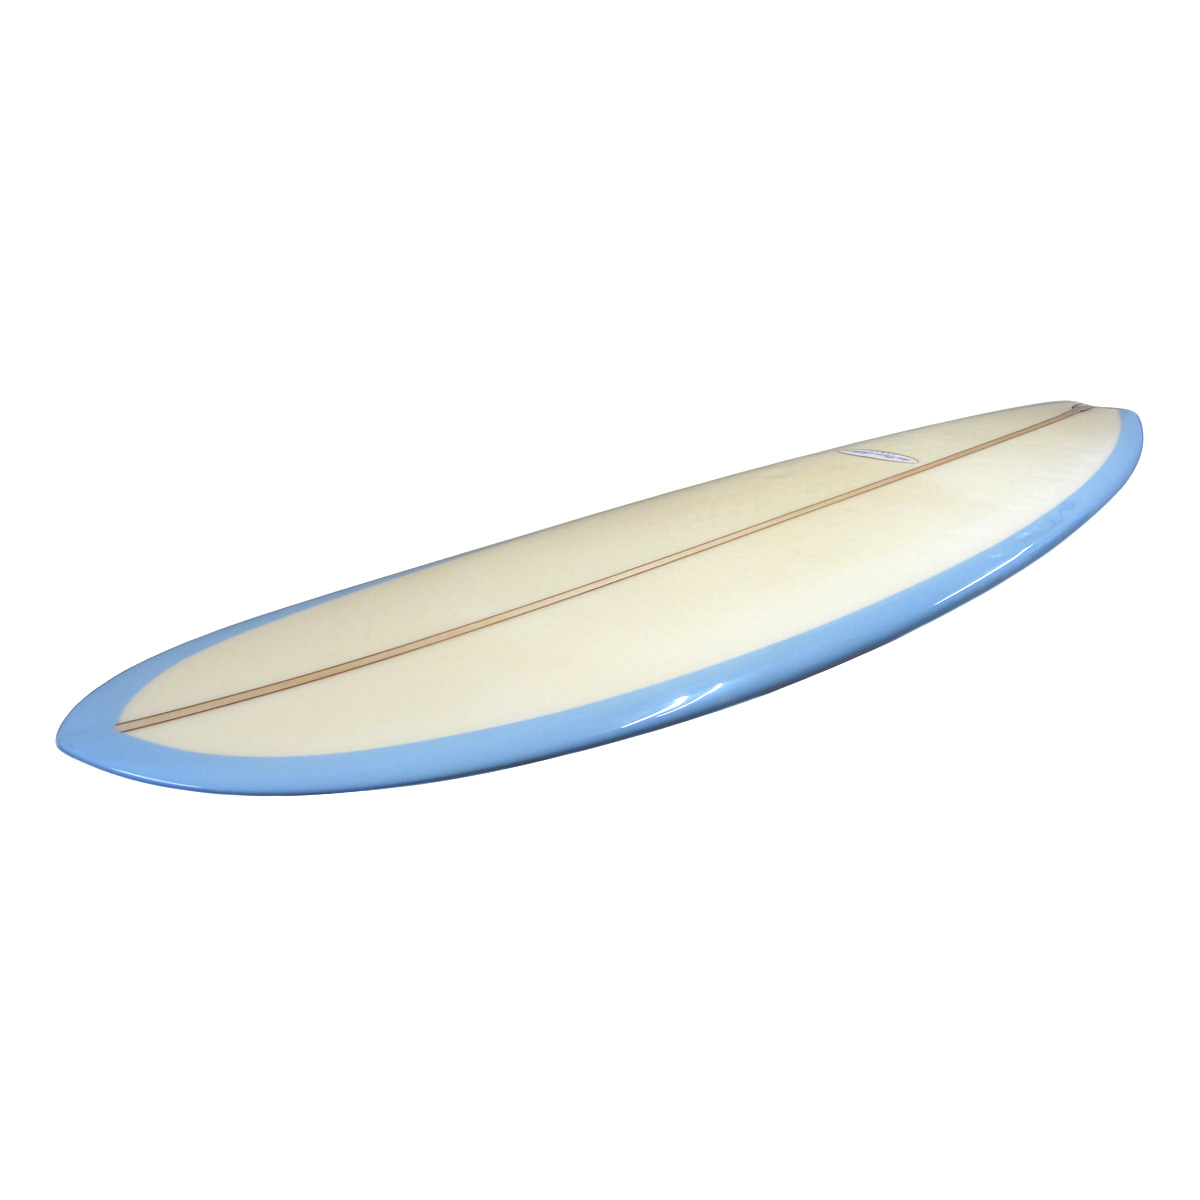 Hino Classic Surfboard  / 6'9 Custom Swarrow